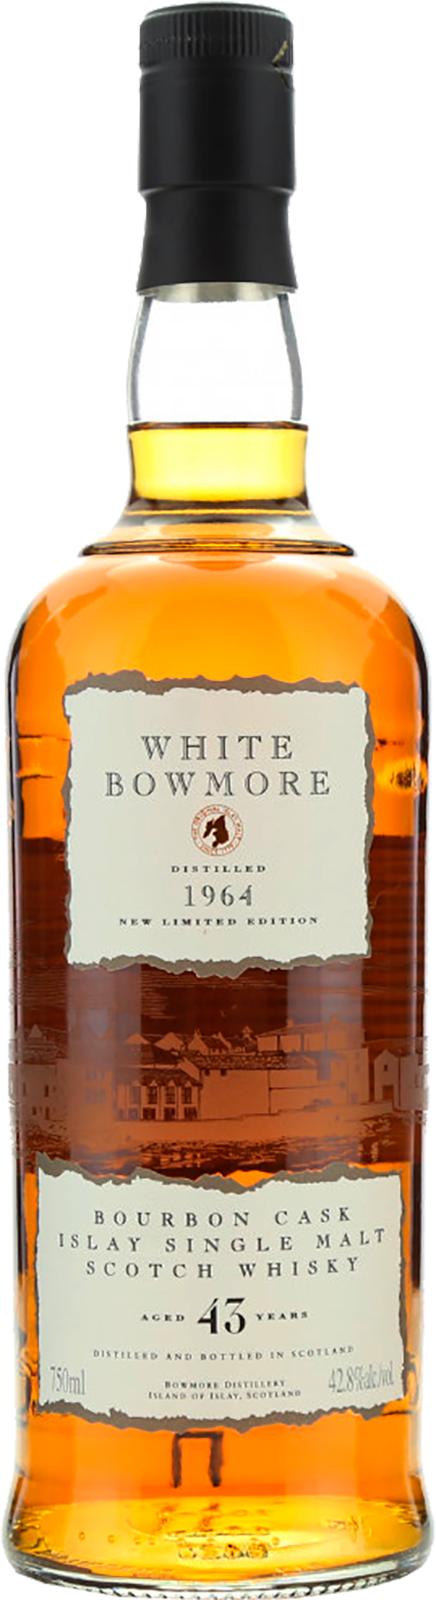 Bowmore 1964 White